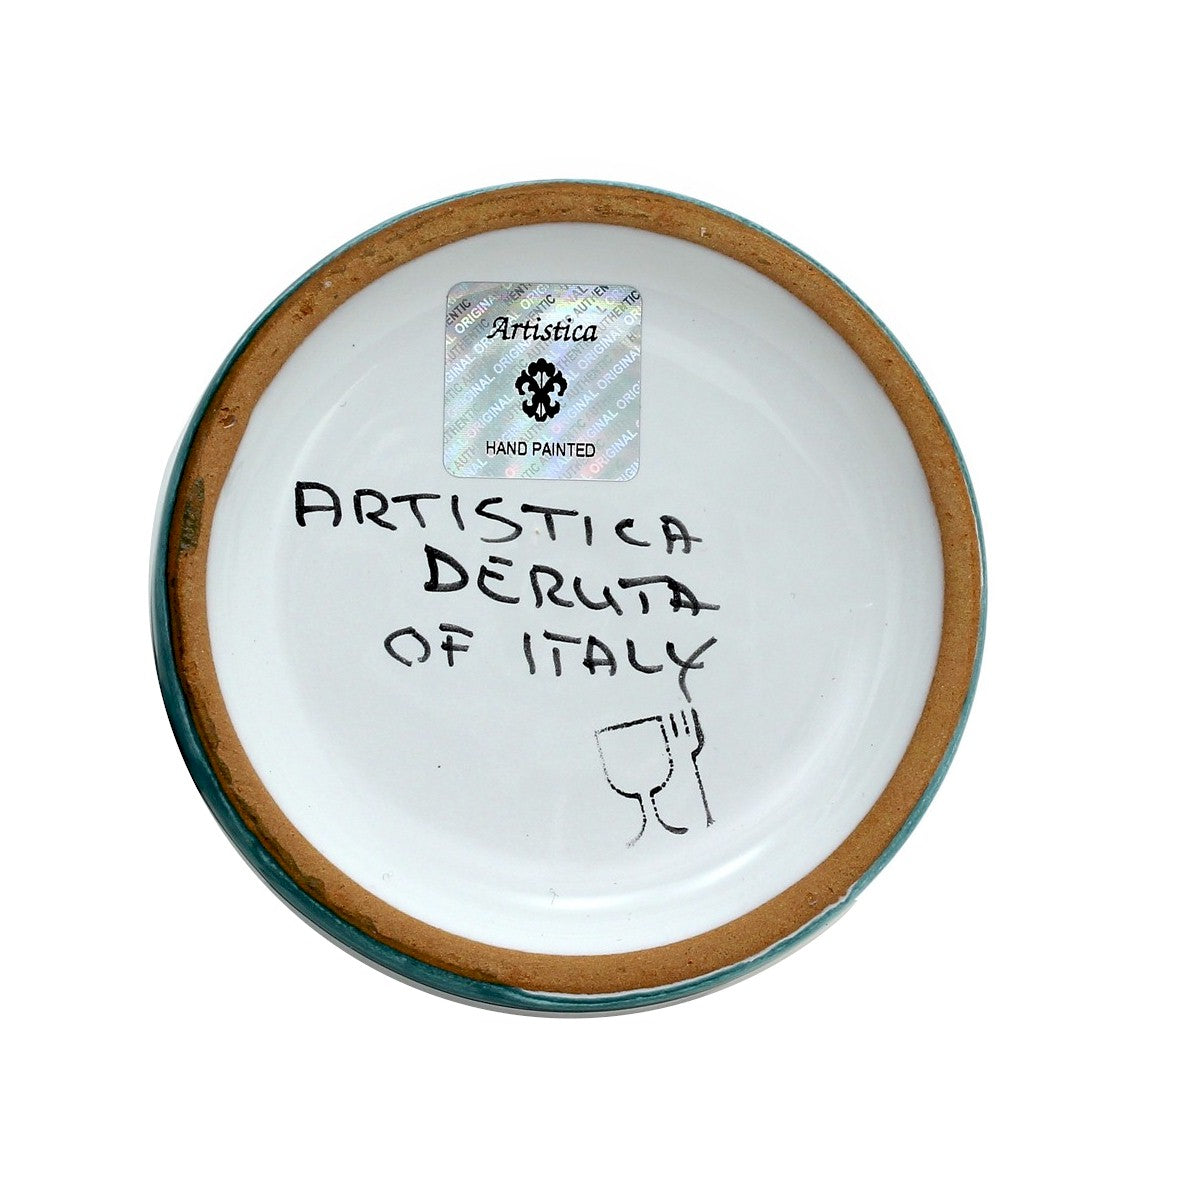 GIFT BOX: With authentic Deruta hand painted ceramic - RAFFAELLESCO: UTENSIL HOLDER